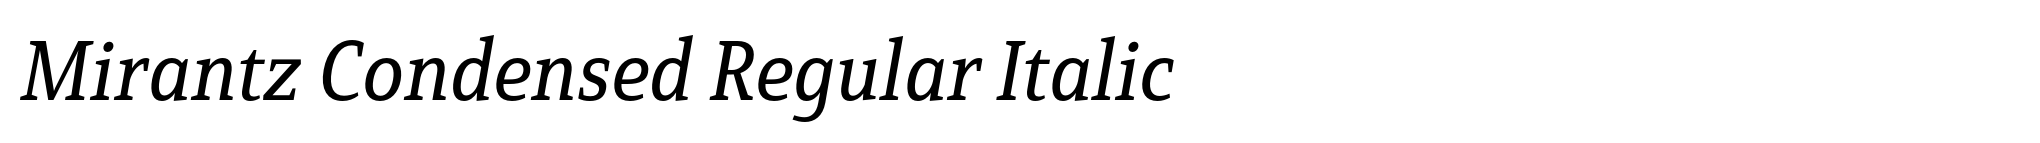 Mirantz Condensed Regular Italic image